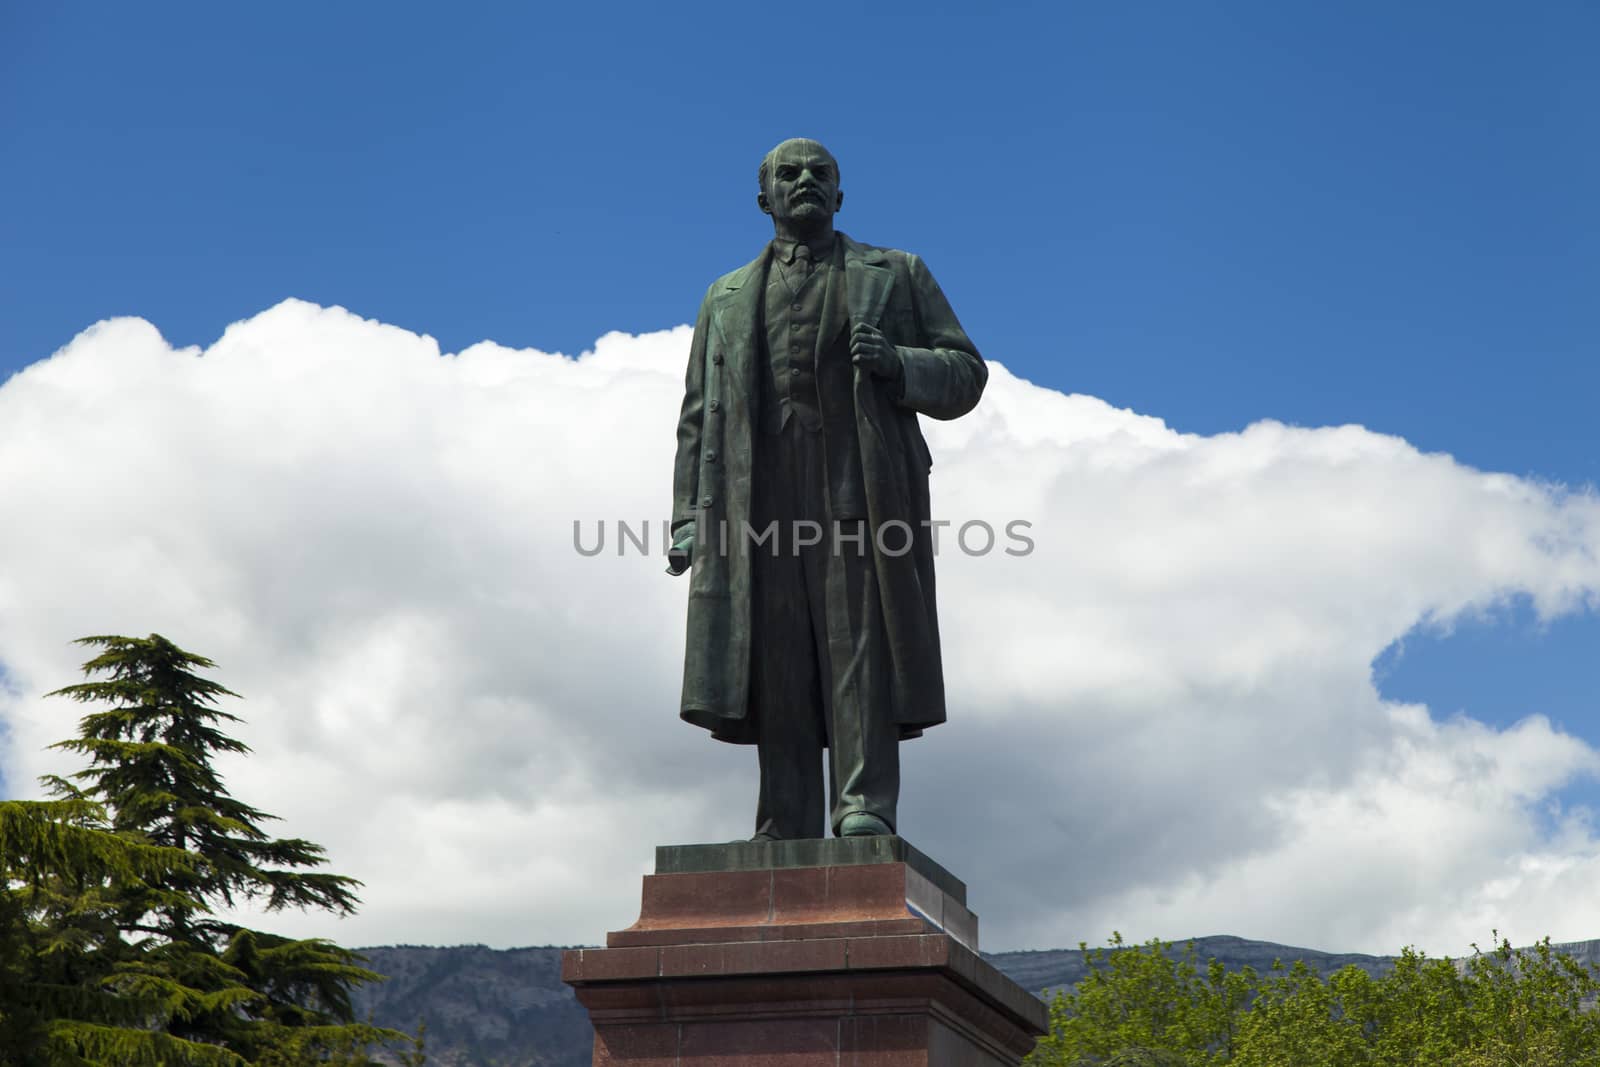 Monument to Lenin by selezenj